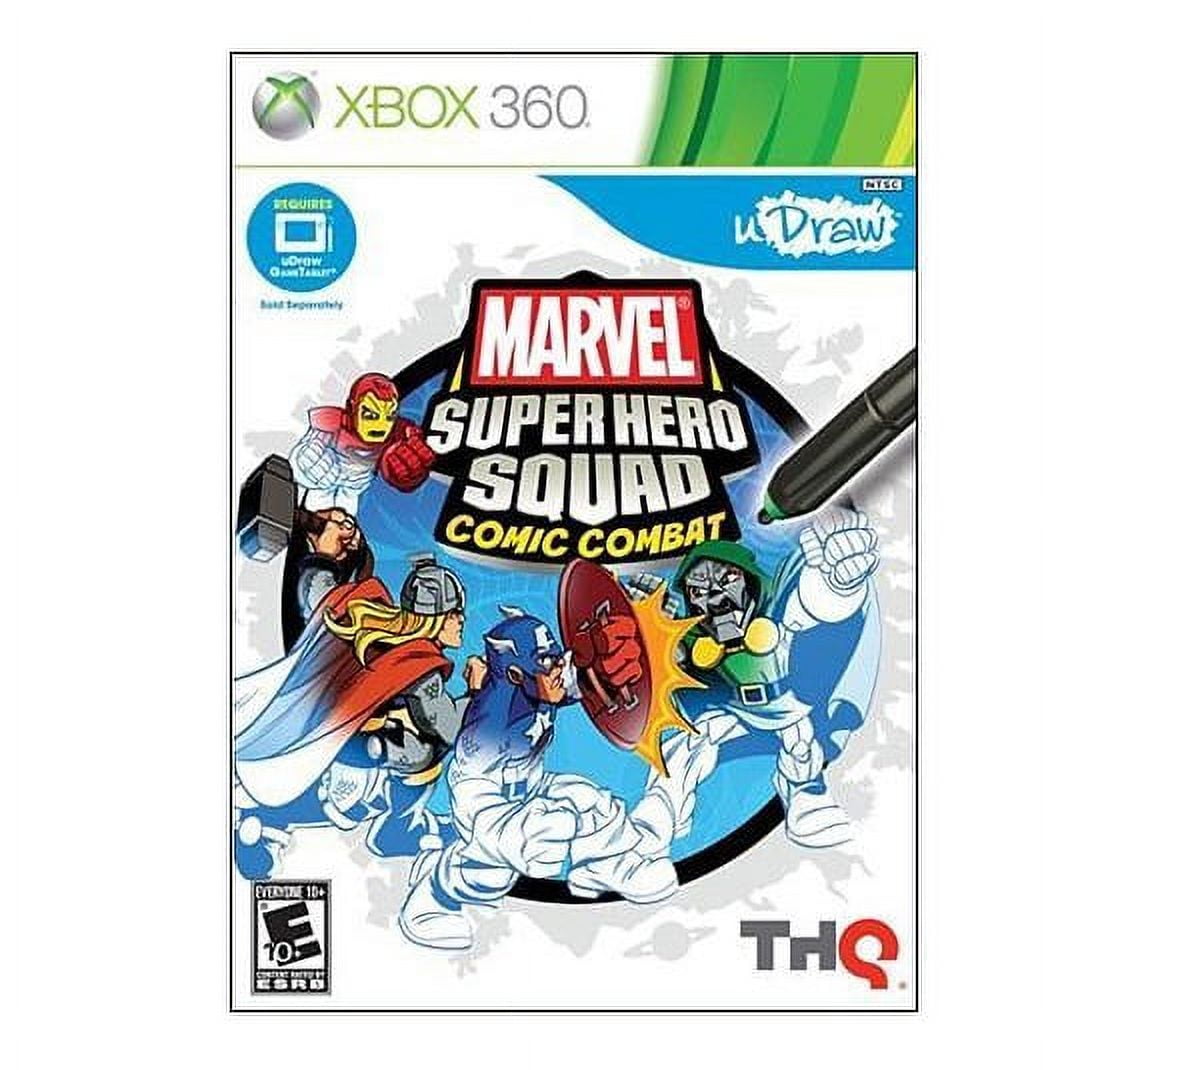 uDraw Marvel Super Hero Squad: Comic Combat, THQ, XBOX 360, 752919553954 